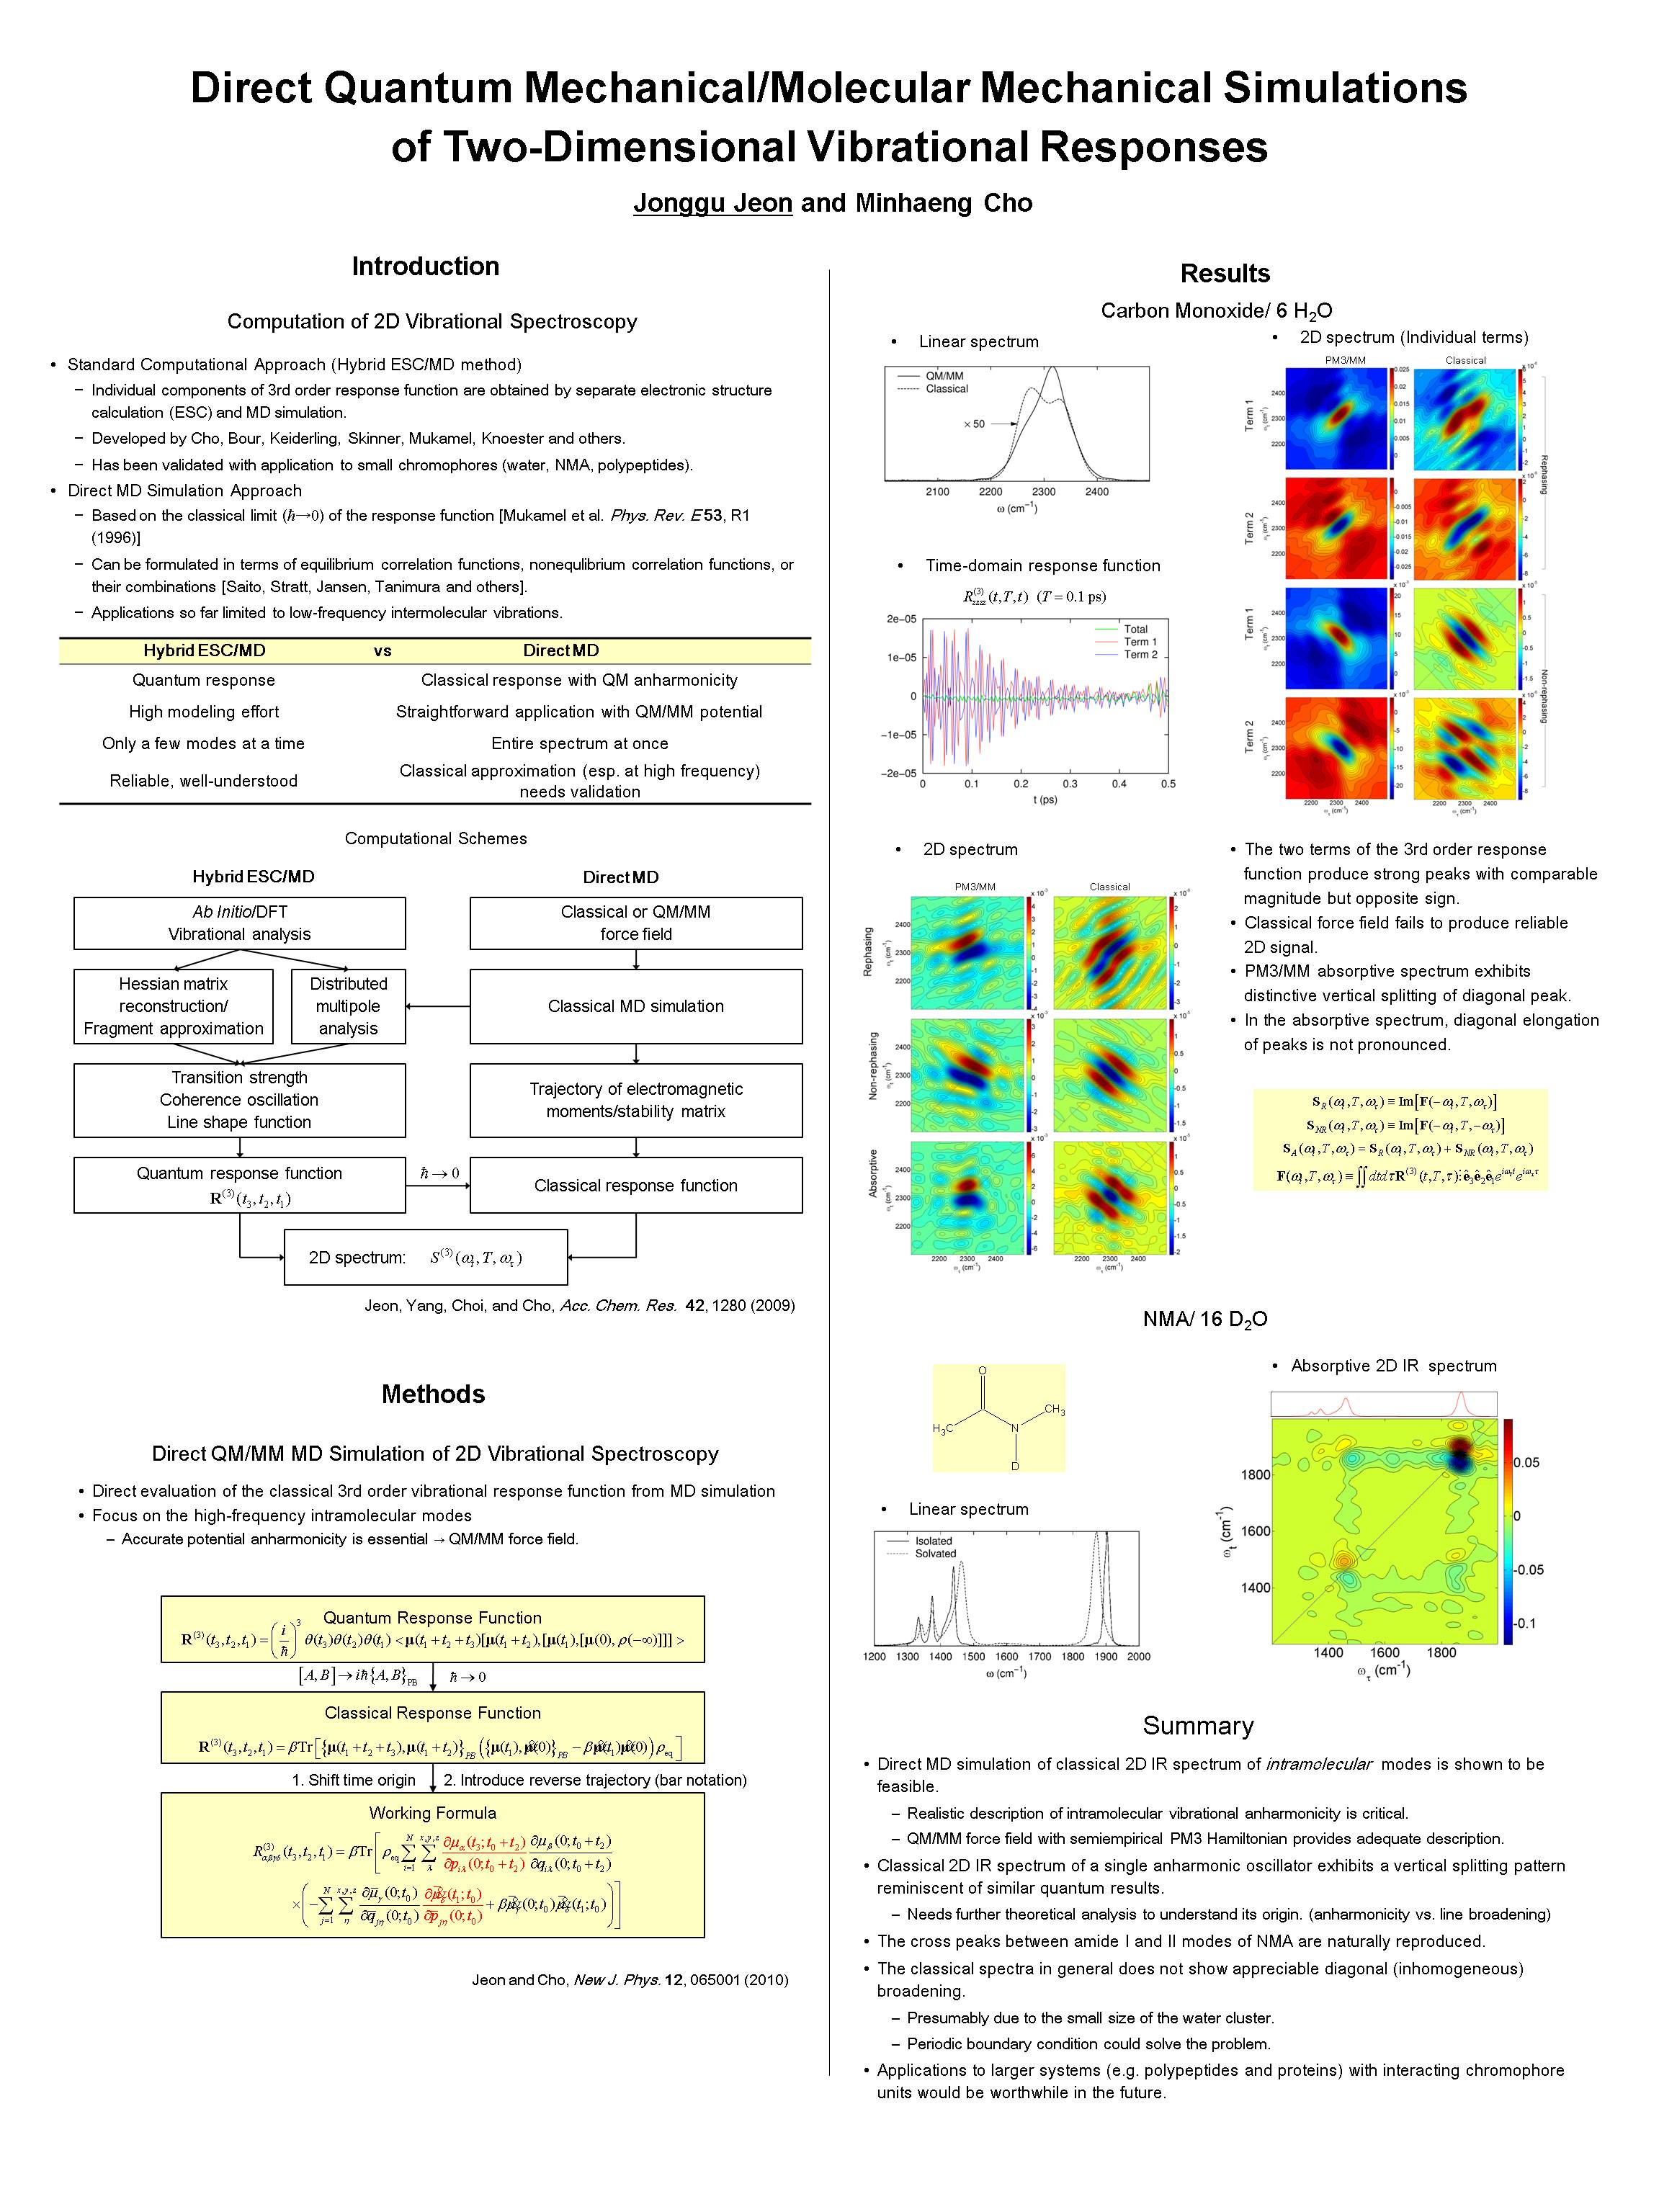 Direct Quantum Mechanical/Molecular Mechanical Simulations of Two-Dimensional Vibrational Responses